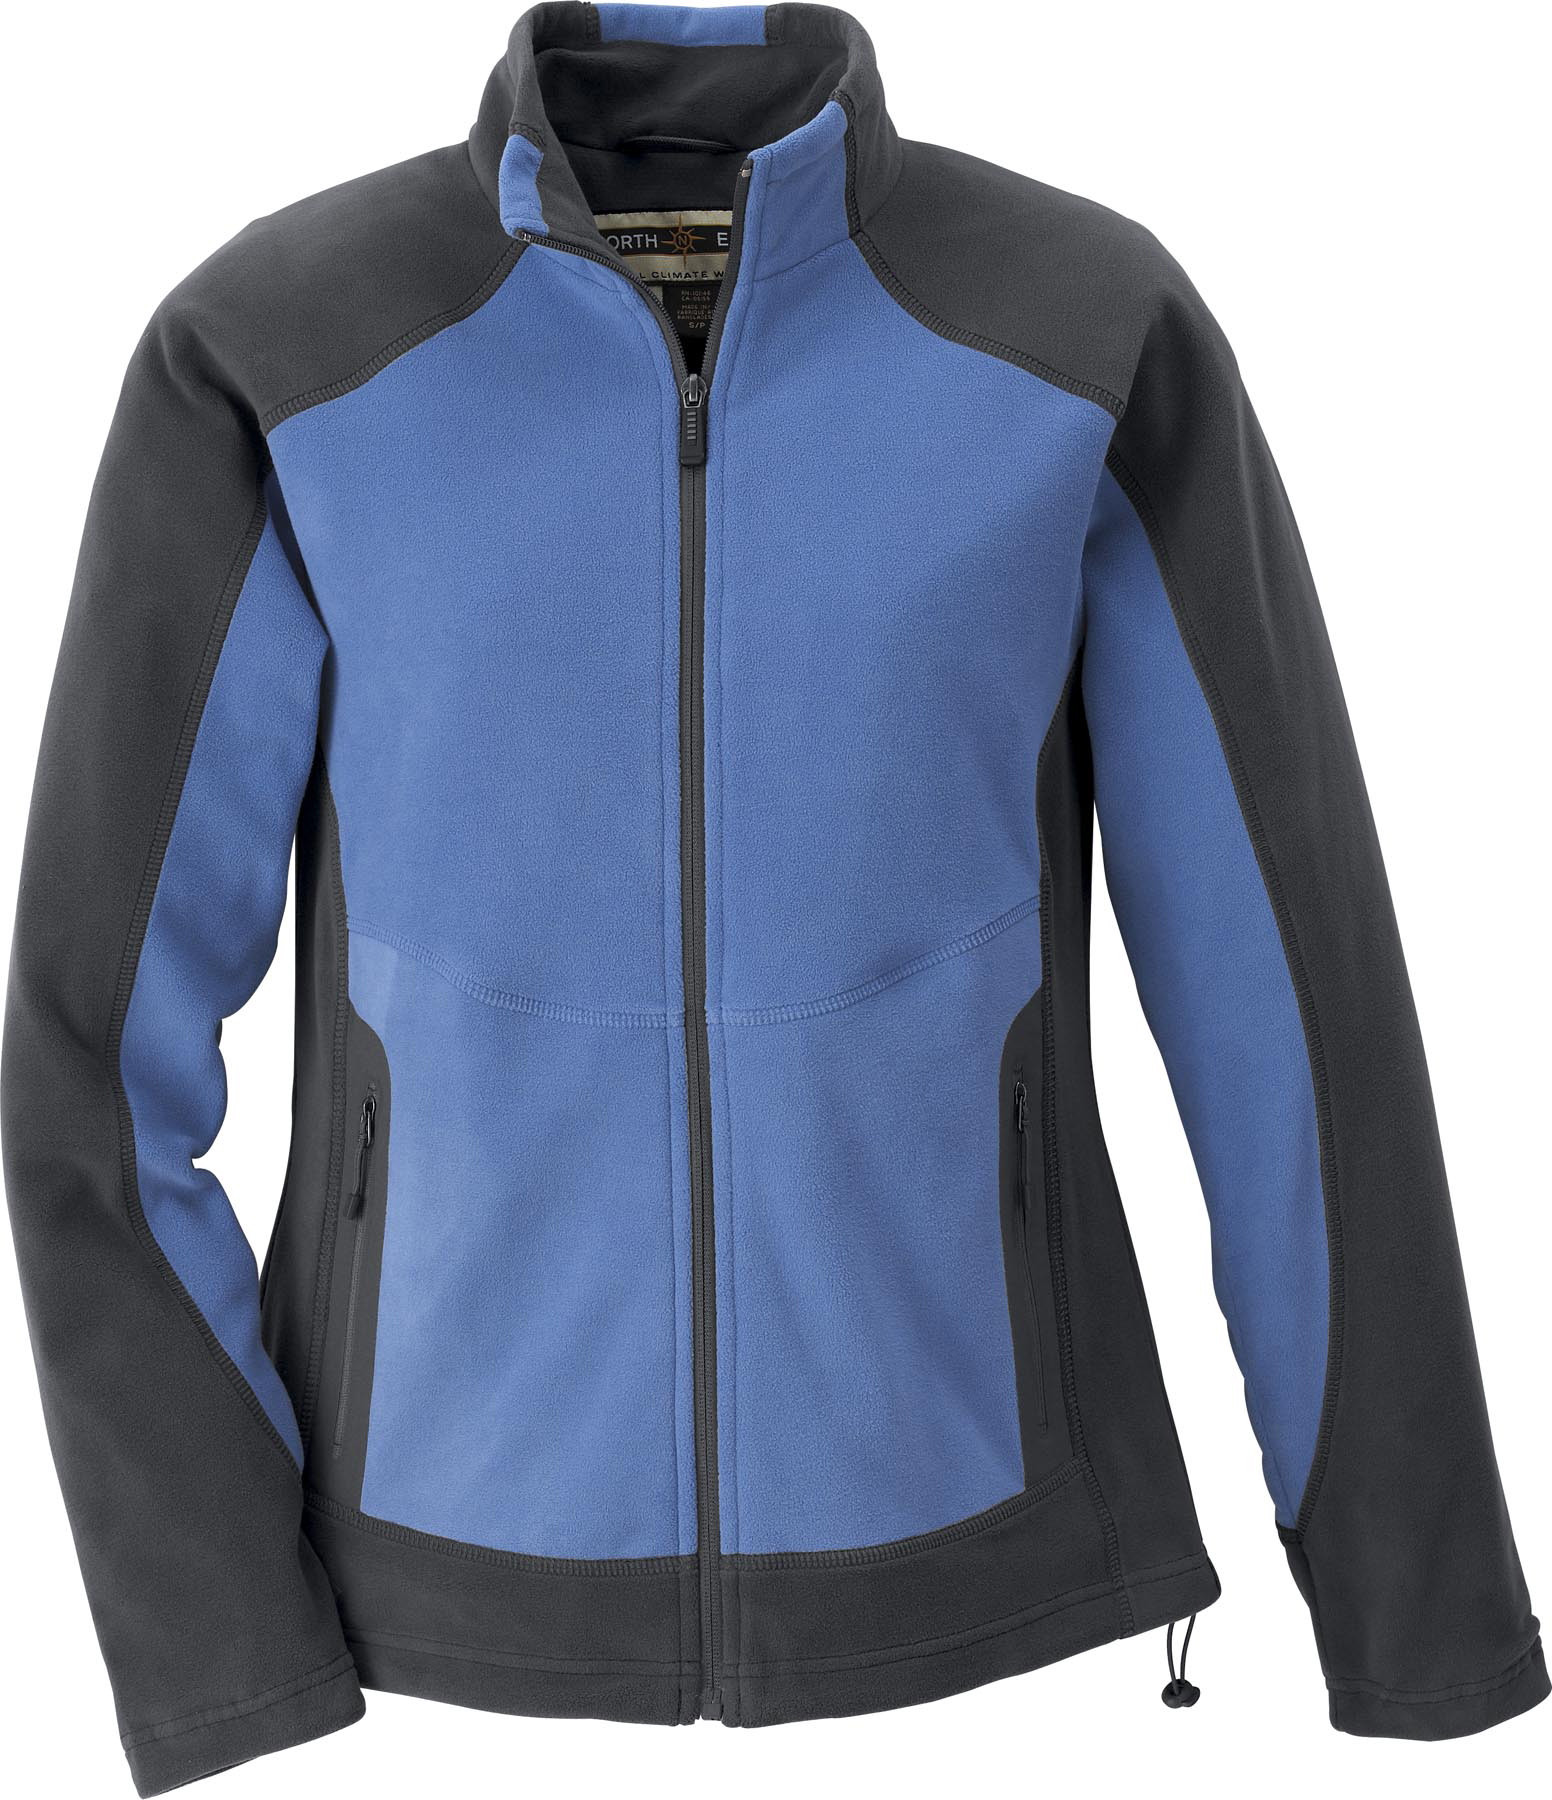 Ash City Microfleece 78056 - Ladies' Jacket With Windsmarttm Technology